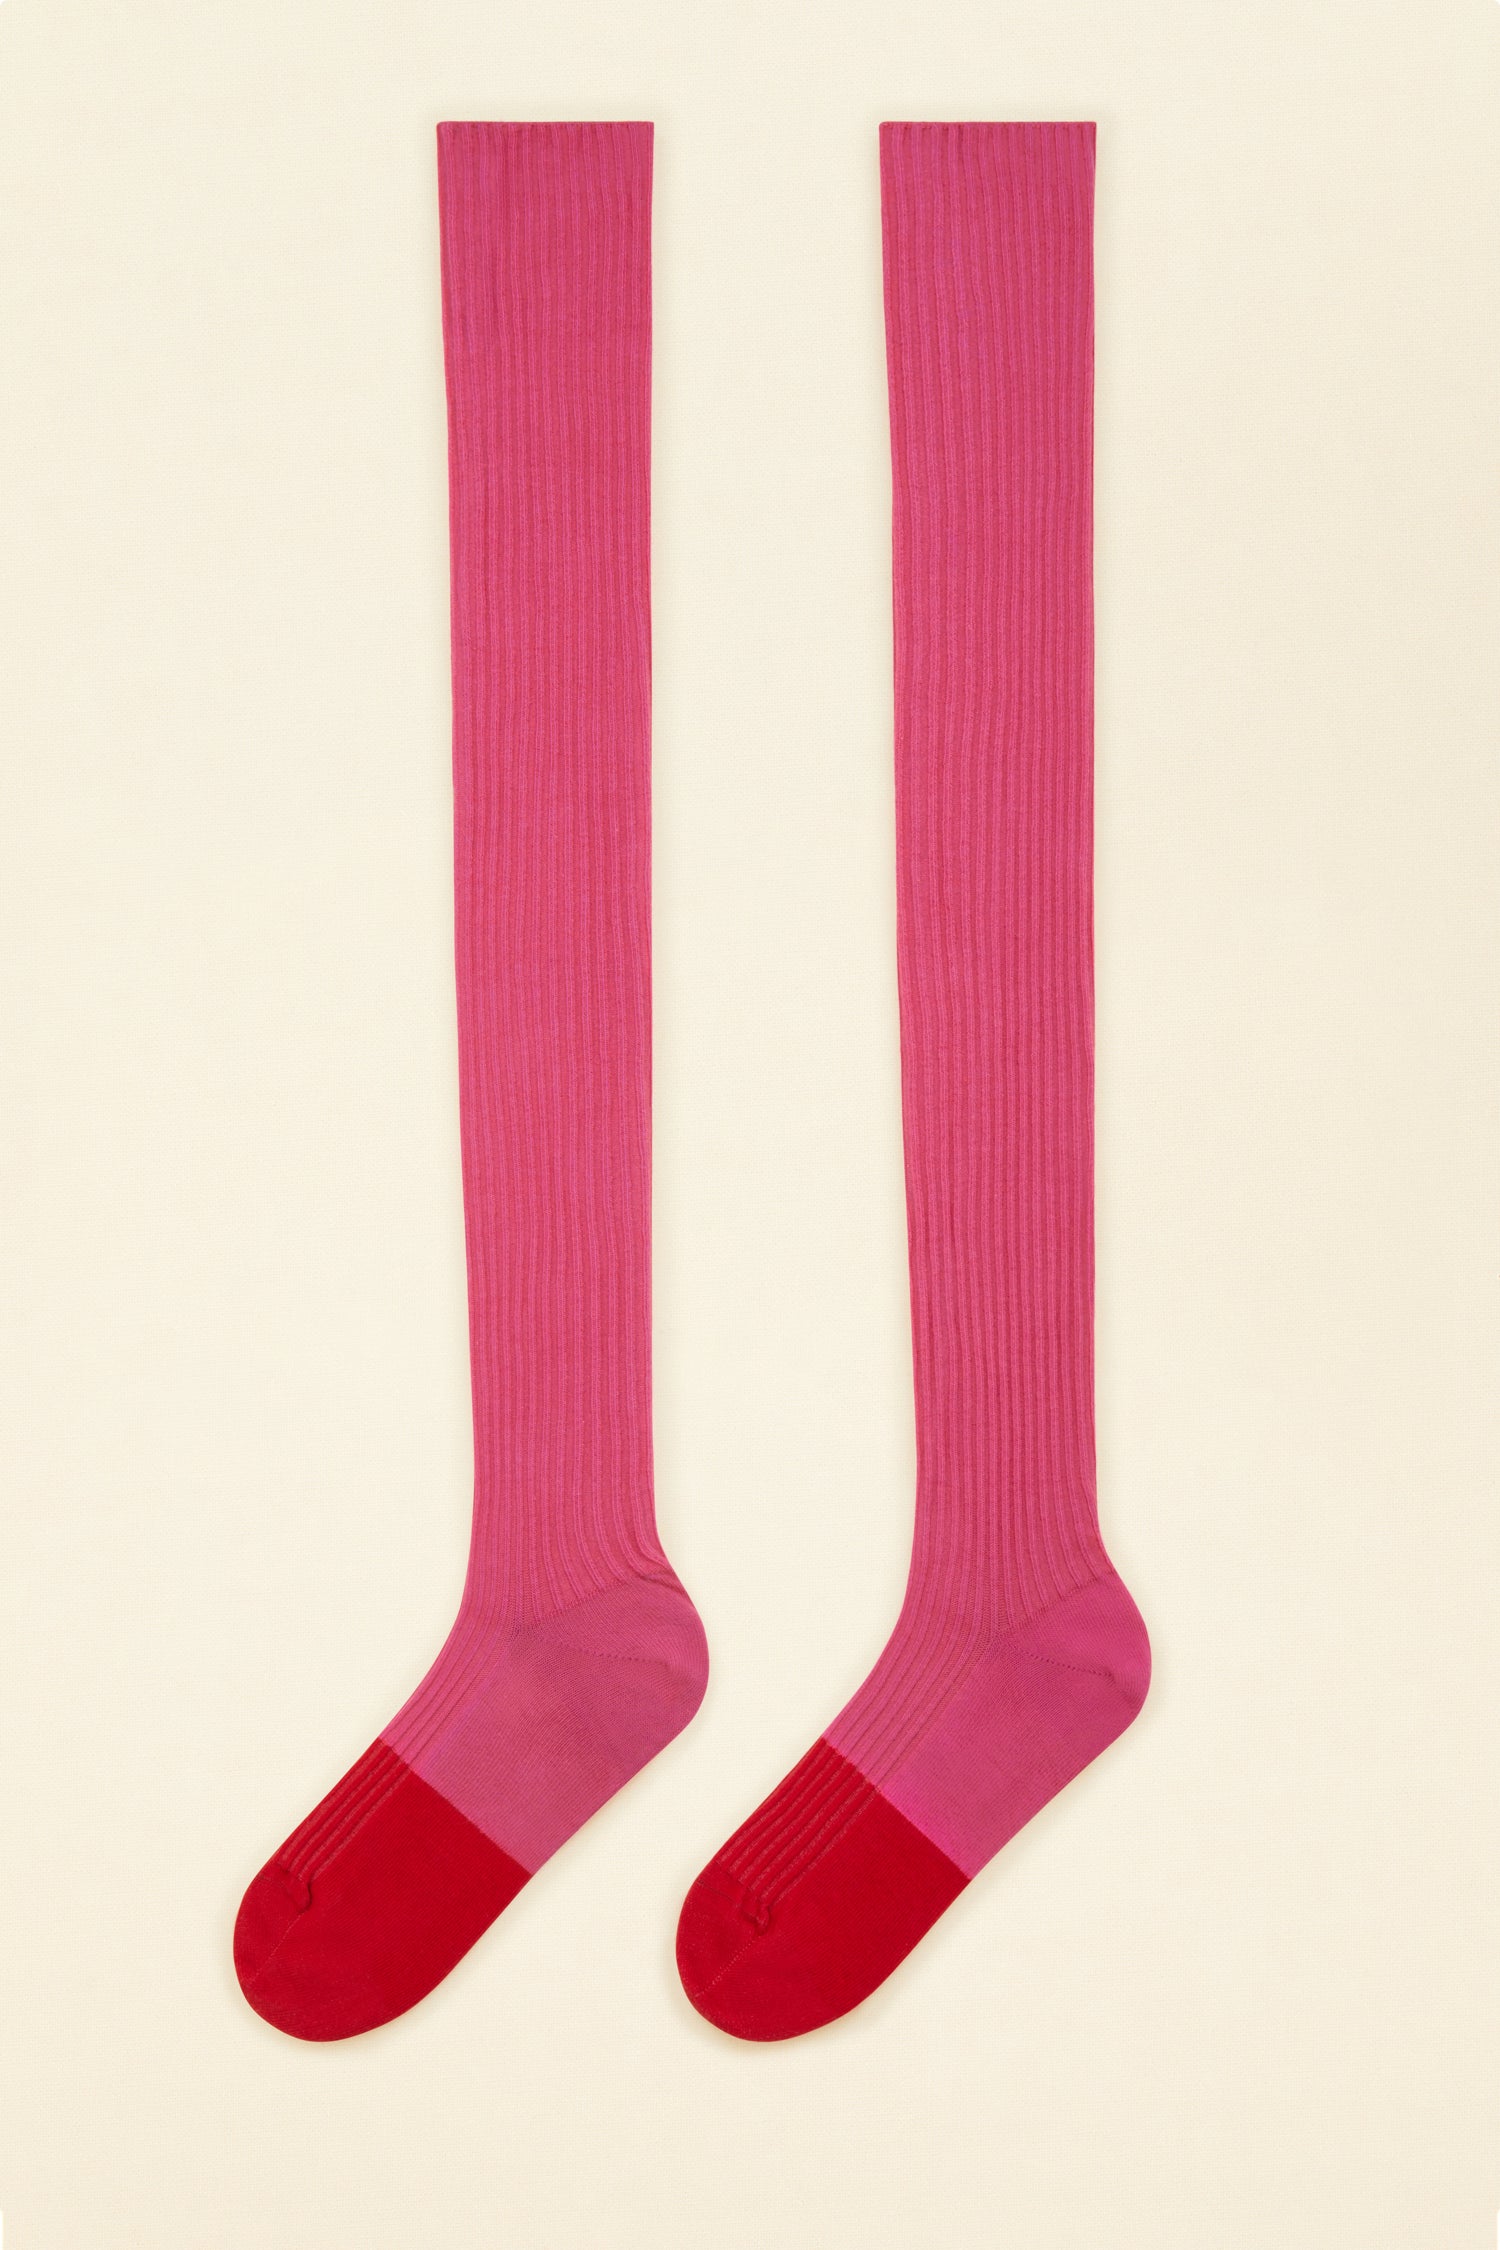 Cotton Plain Anganwadi Pink Socks, Quarter Length at Rs 7.5/pair